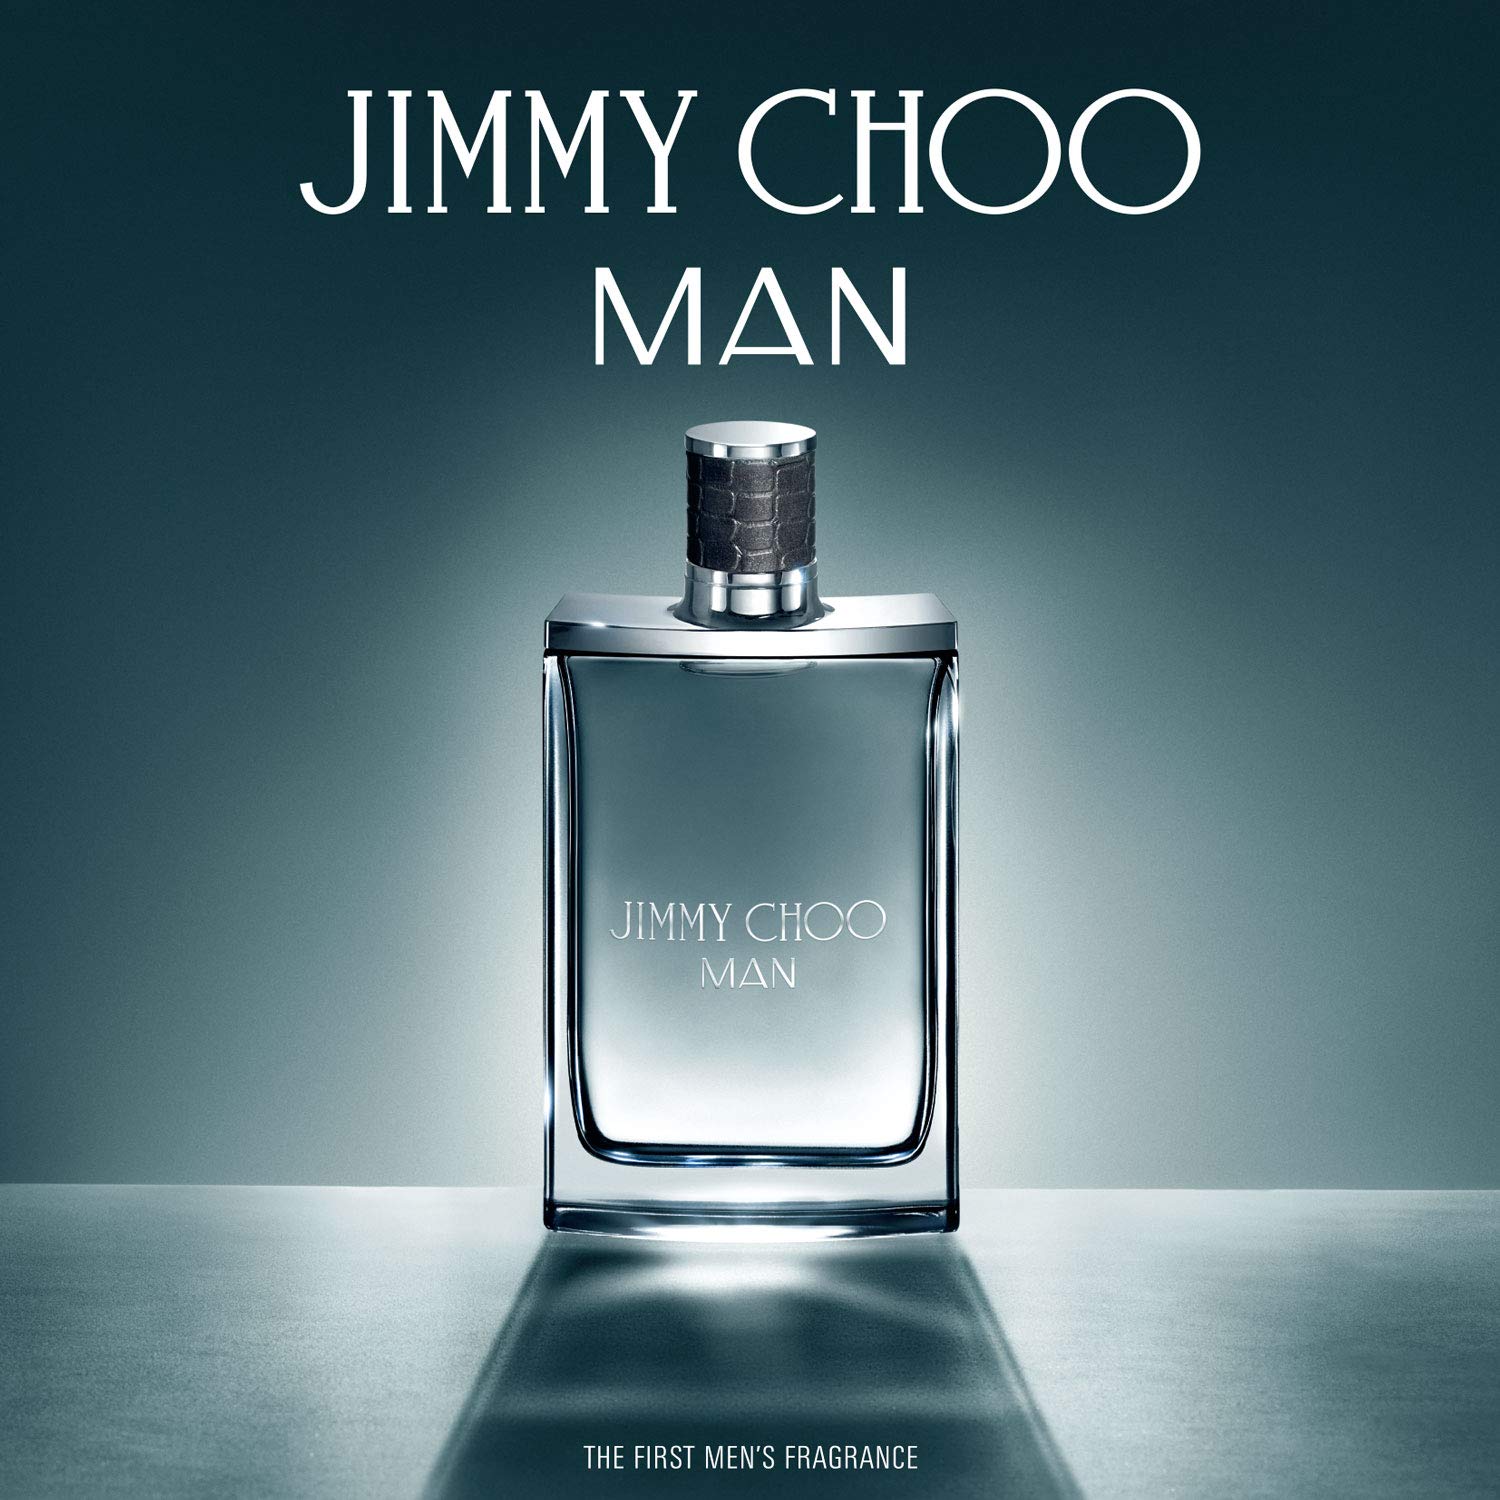 Jimmy Choo Man Blue Eau de Toilette/3.3 oz. on SALE